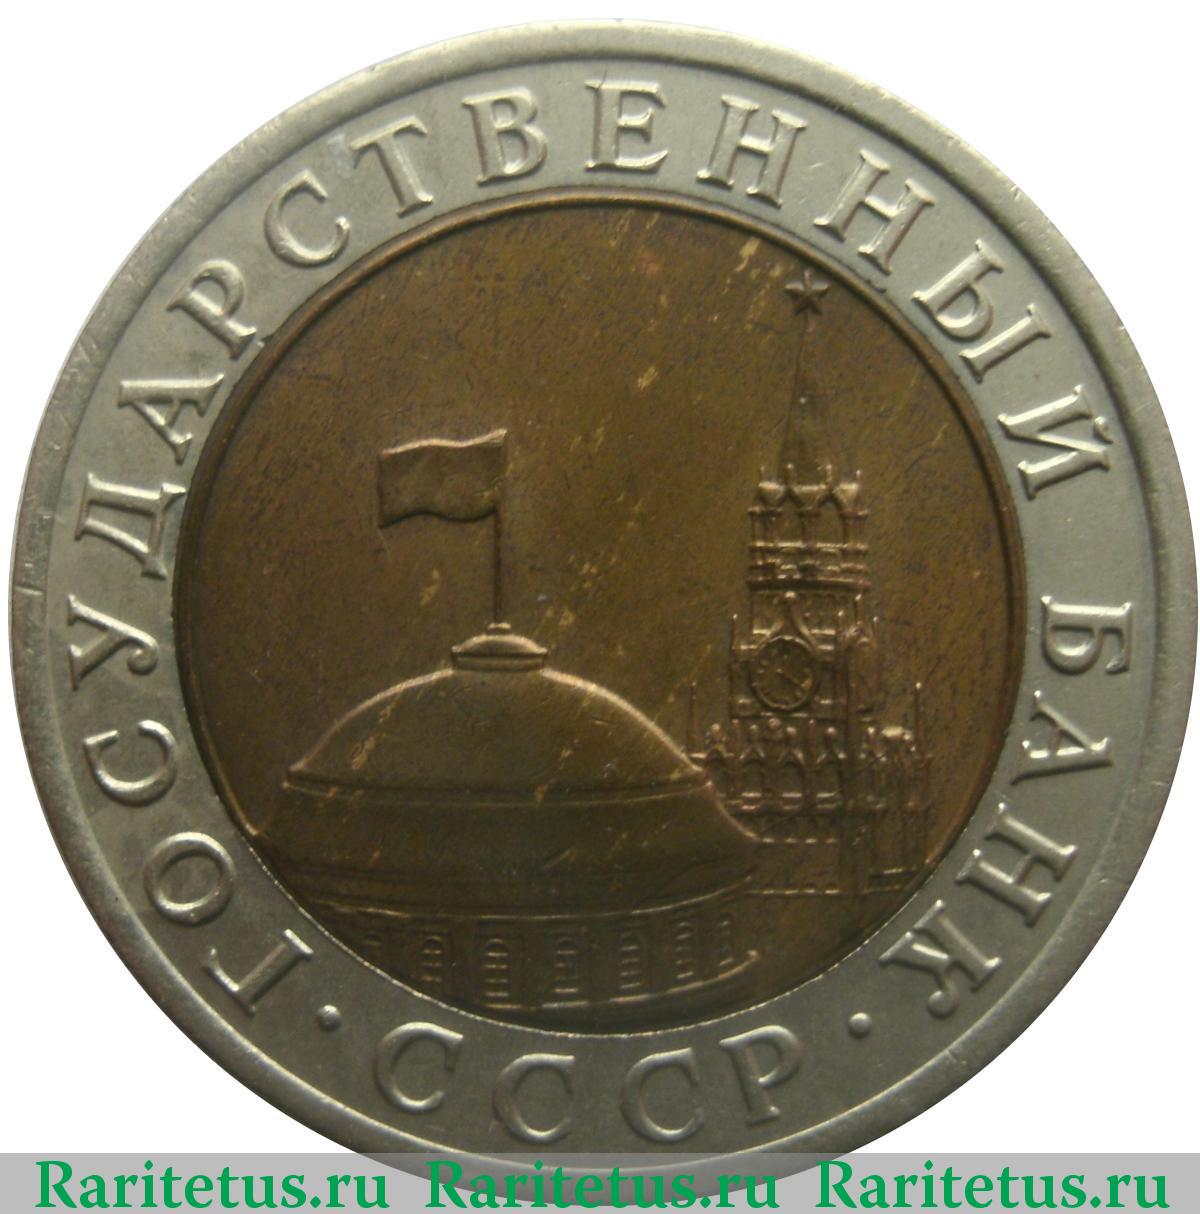 10 рублей. Биметалл. 1992 г. Аверс